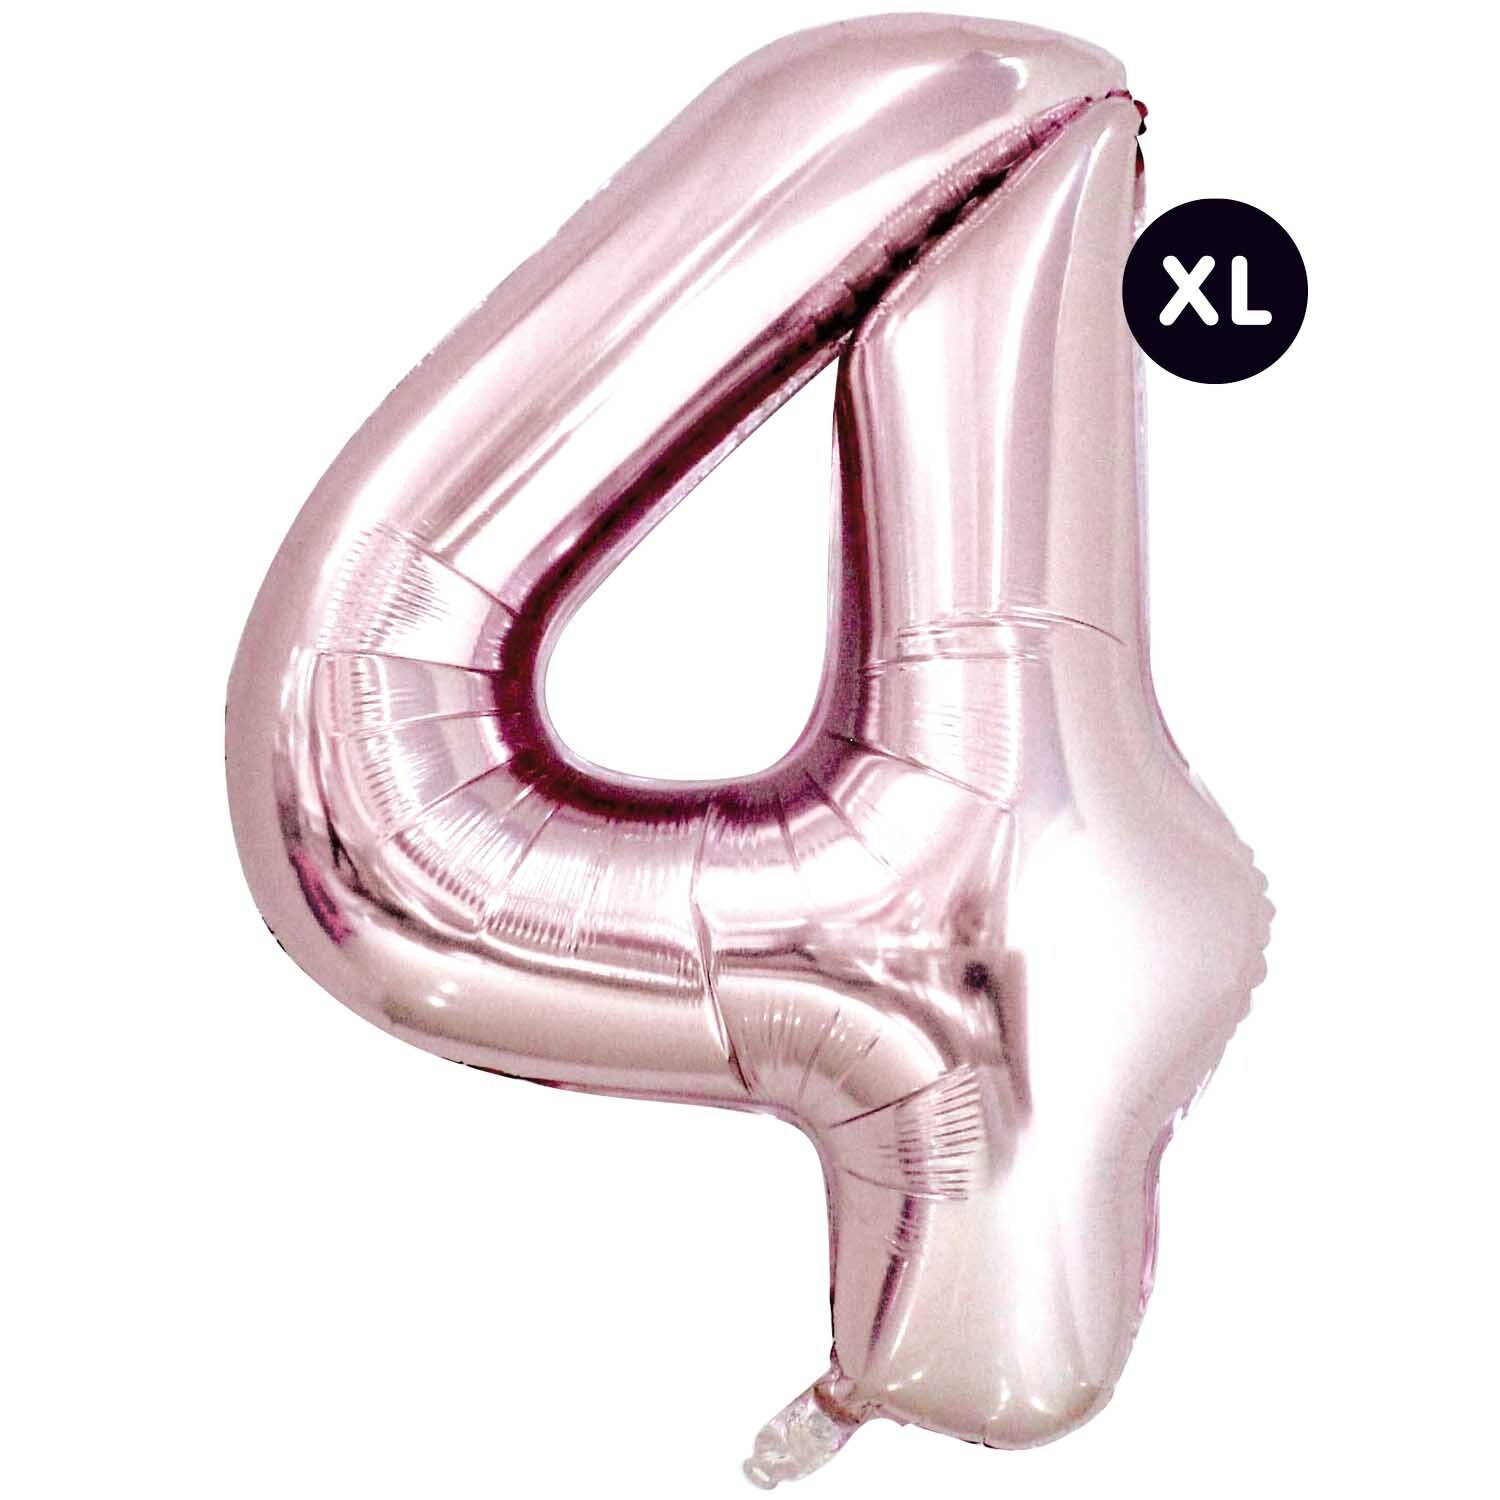 Folienballon Zahl rosa 86cm